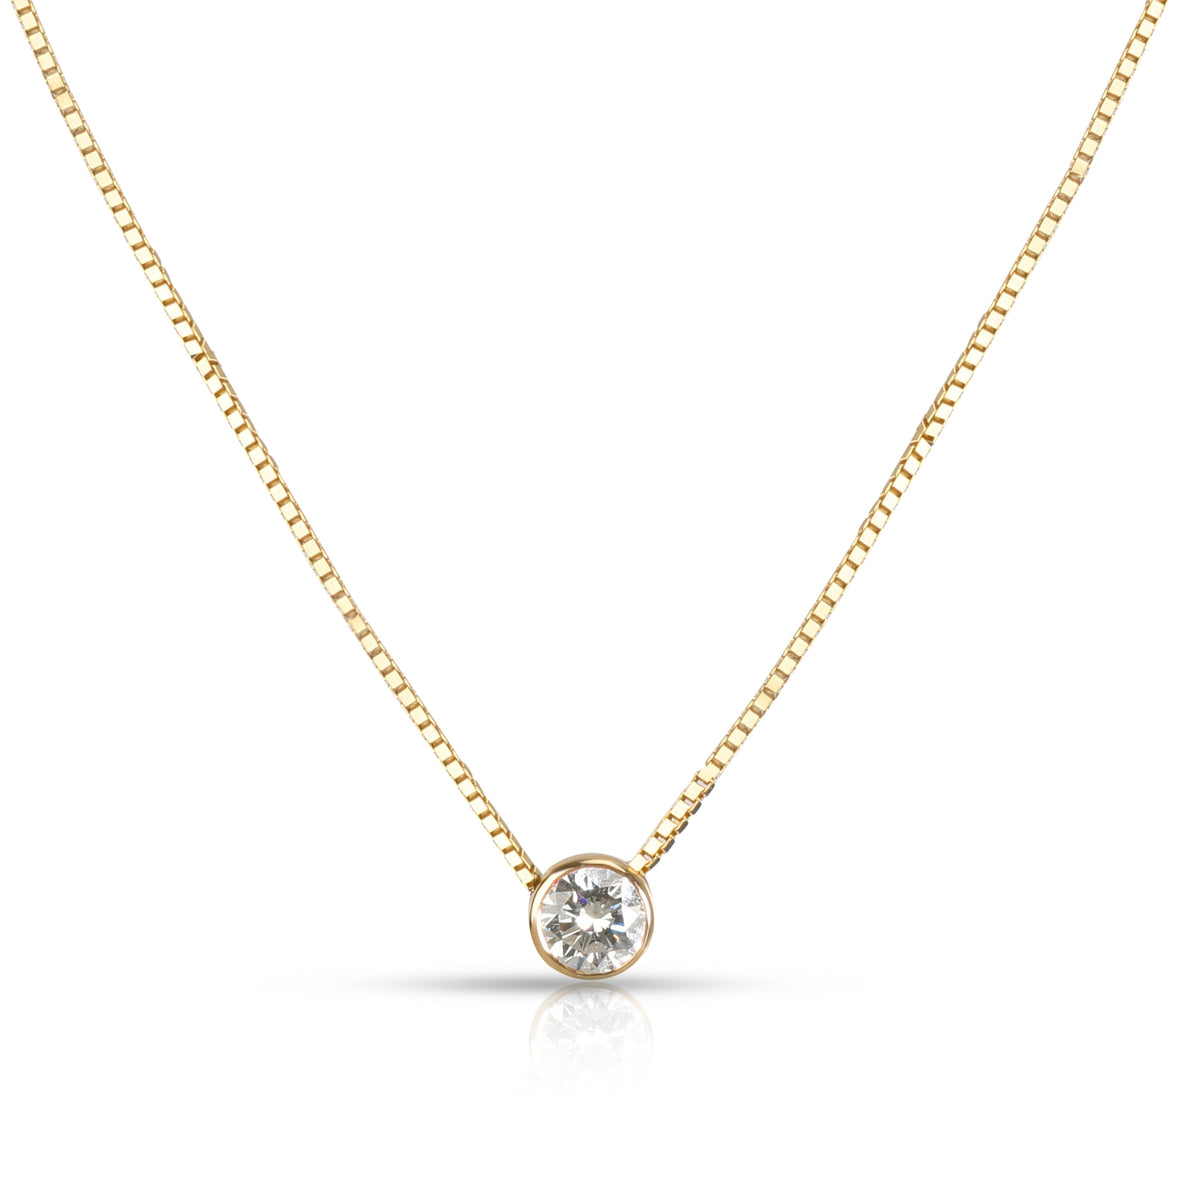 Bezel Set Solitaire Diamond Necklace in14K Yellow Gold 0.52 CTW